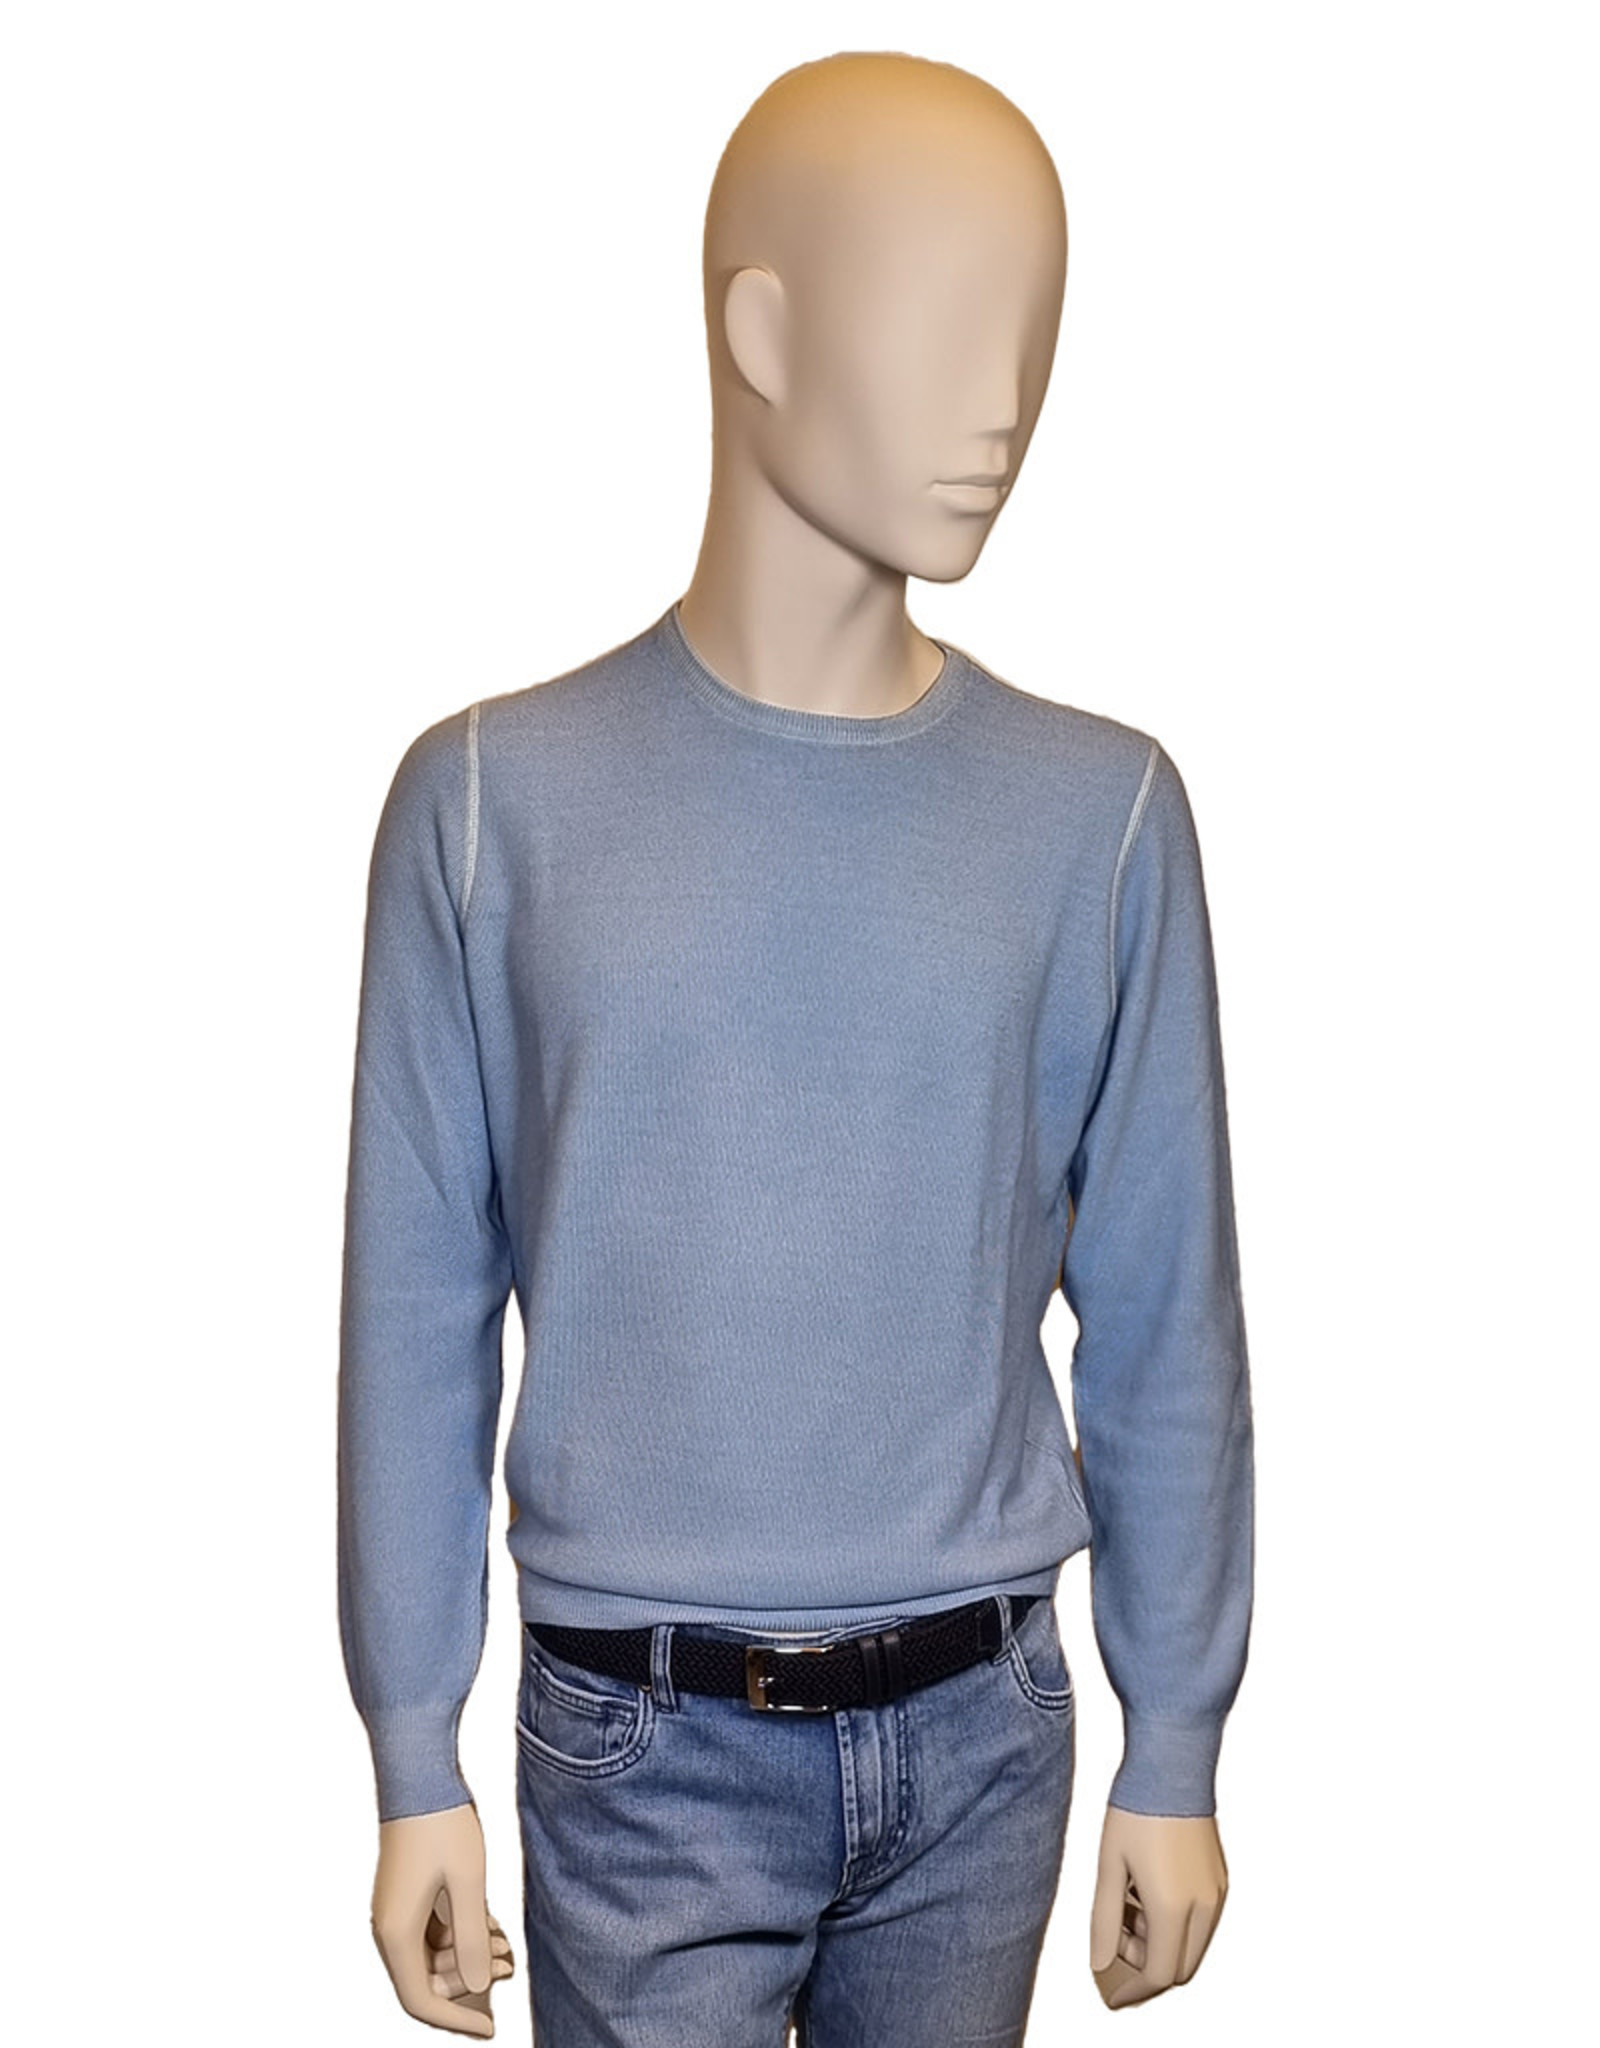 Gran Sasso Sandmore's sweater crew neck light blue